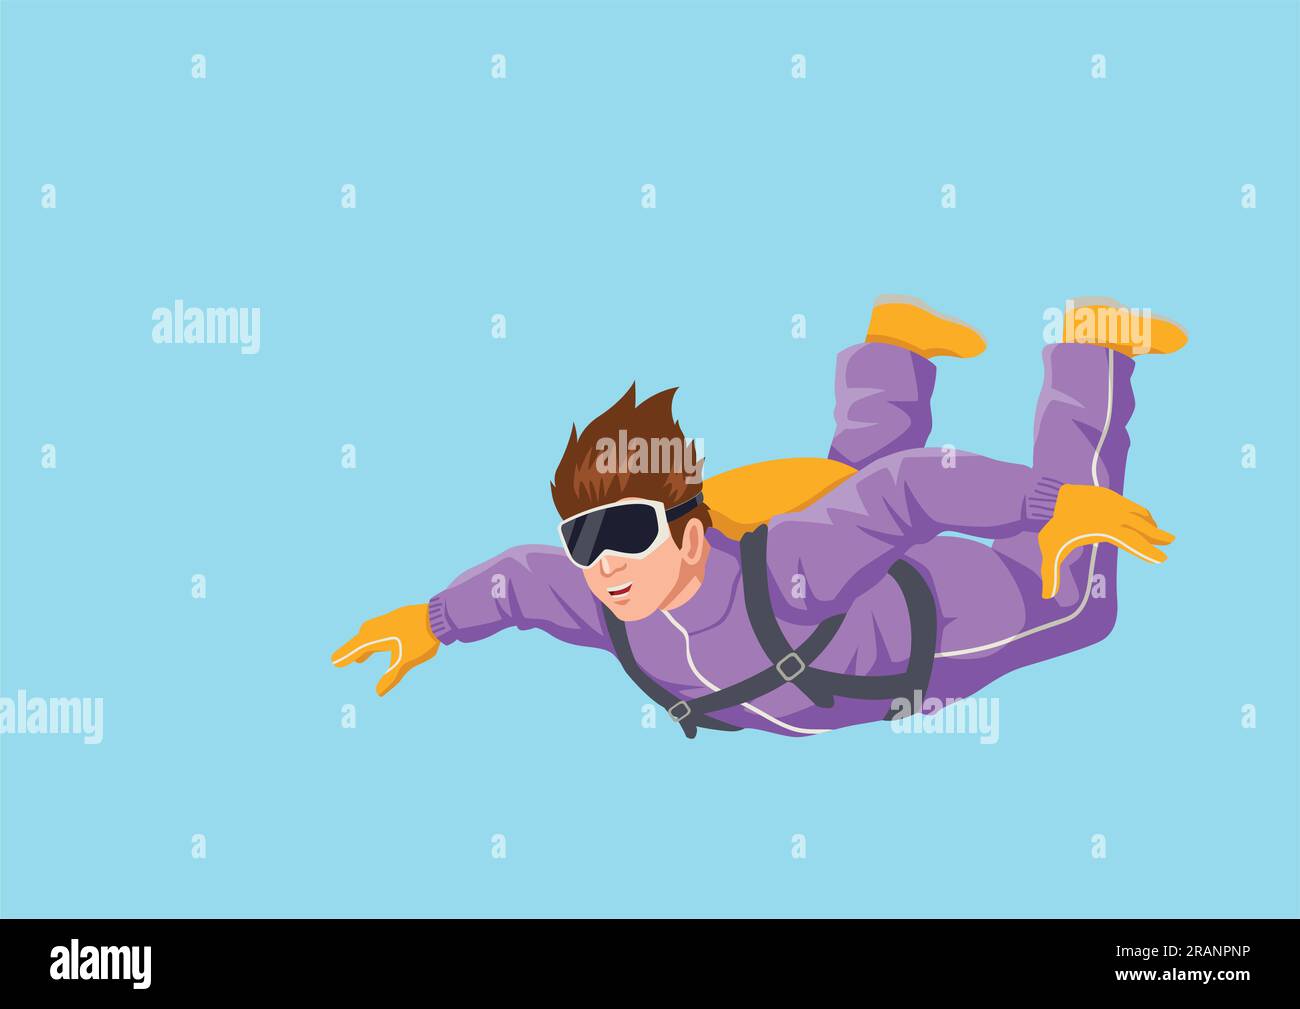 Cartoon illustration of a man sky diving Stock Vector